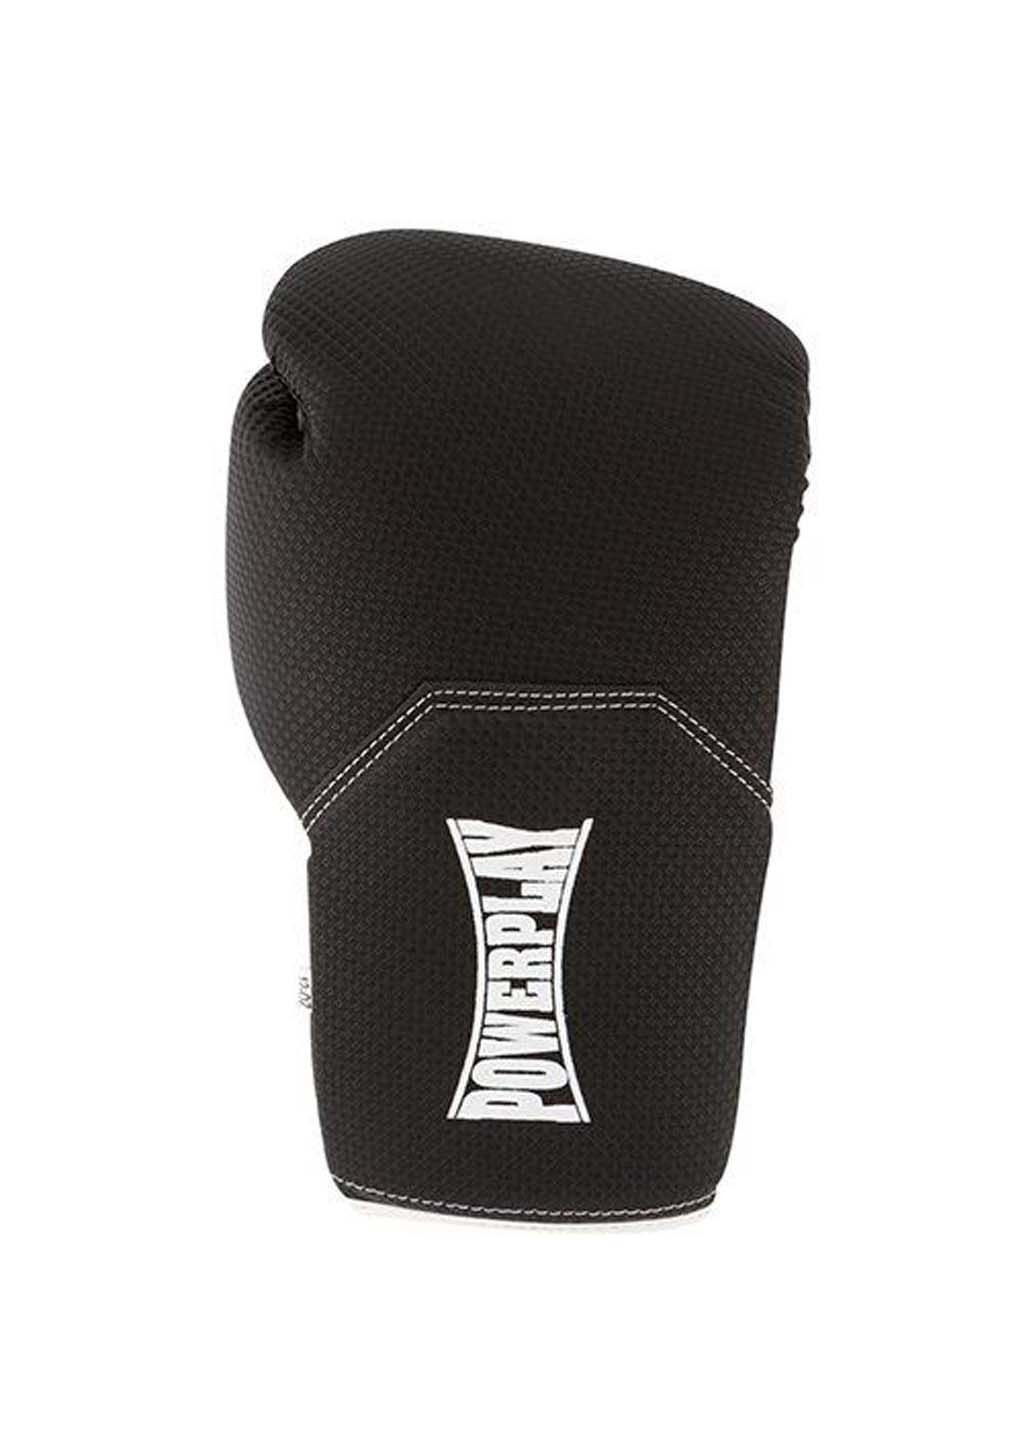 Боксерские перчатки 3011 10oz PowerPlay (285794101)